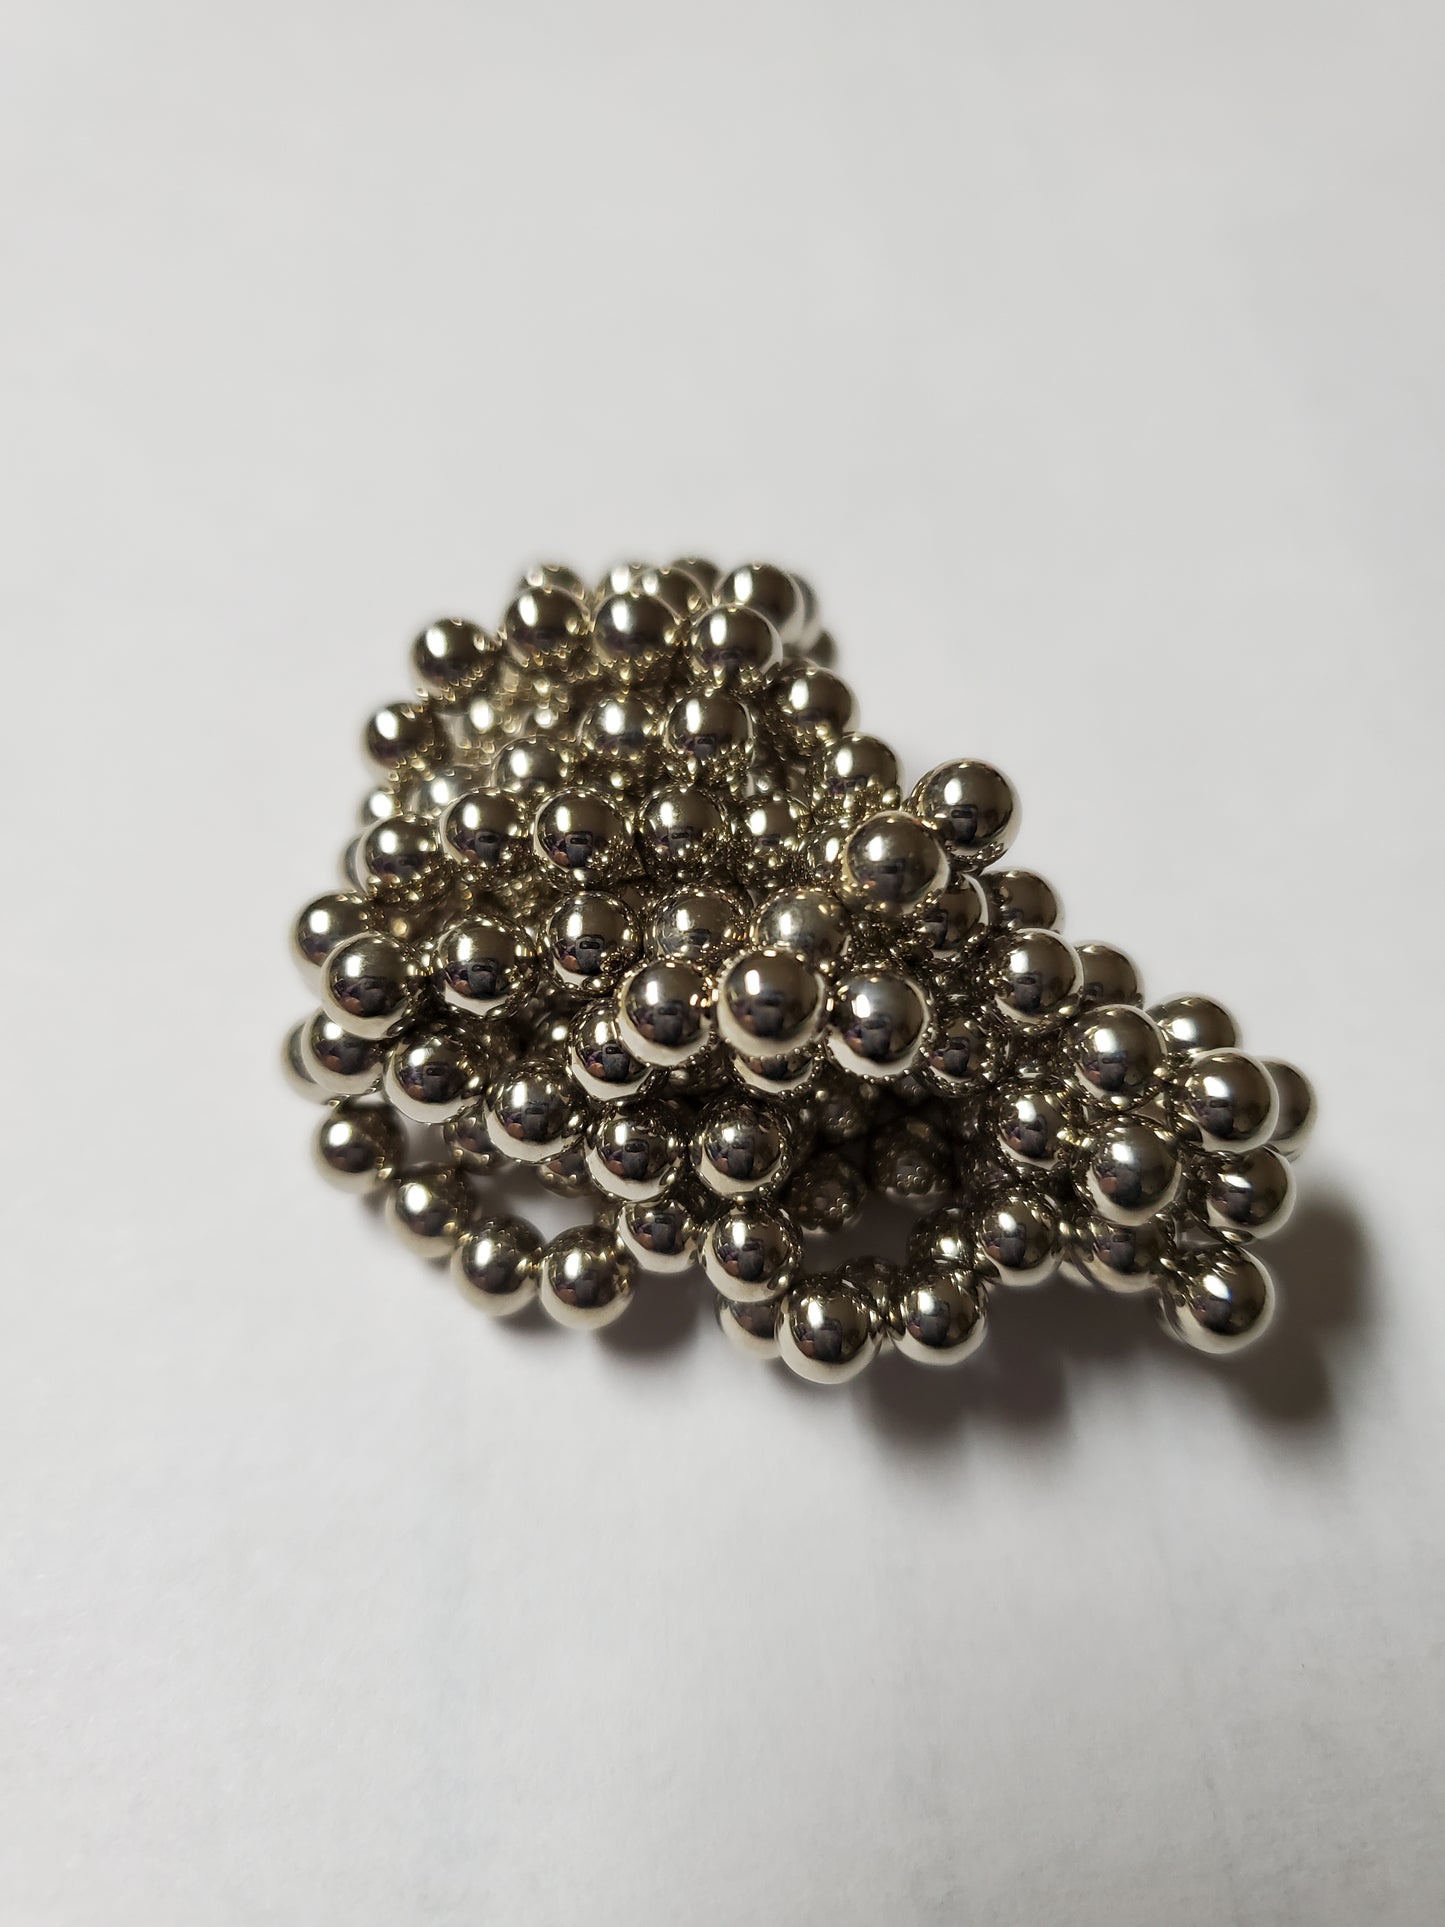 3mm (1/8") round spheres / balls 25 / 50 / 100 / 250 pcs STRONG MAGNETS - N35 Neodymium - rare Earth (1)